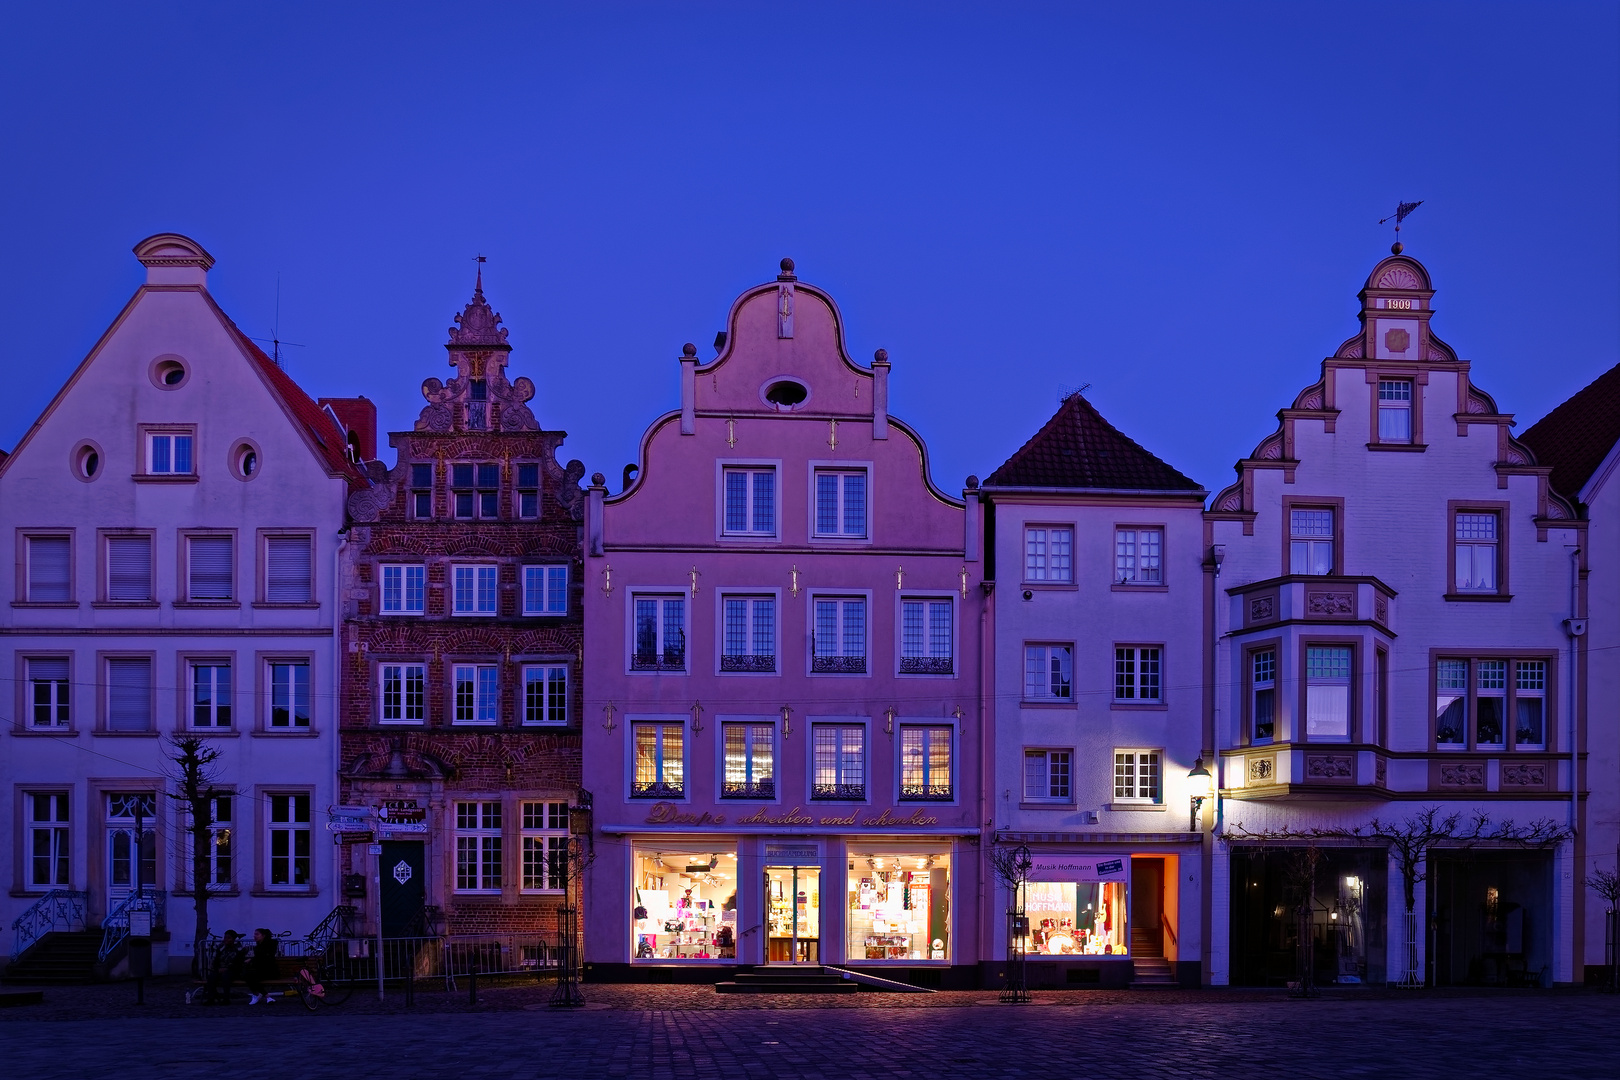 Historischer Marktplatz Warendorf